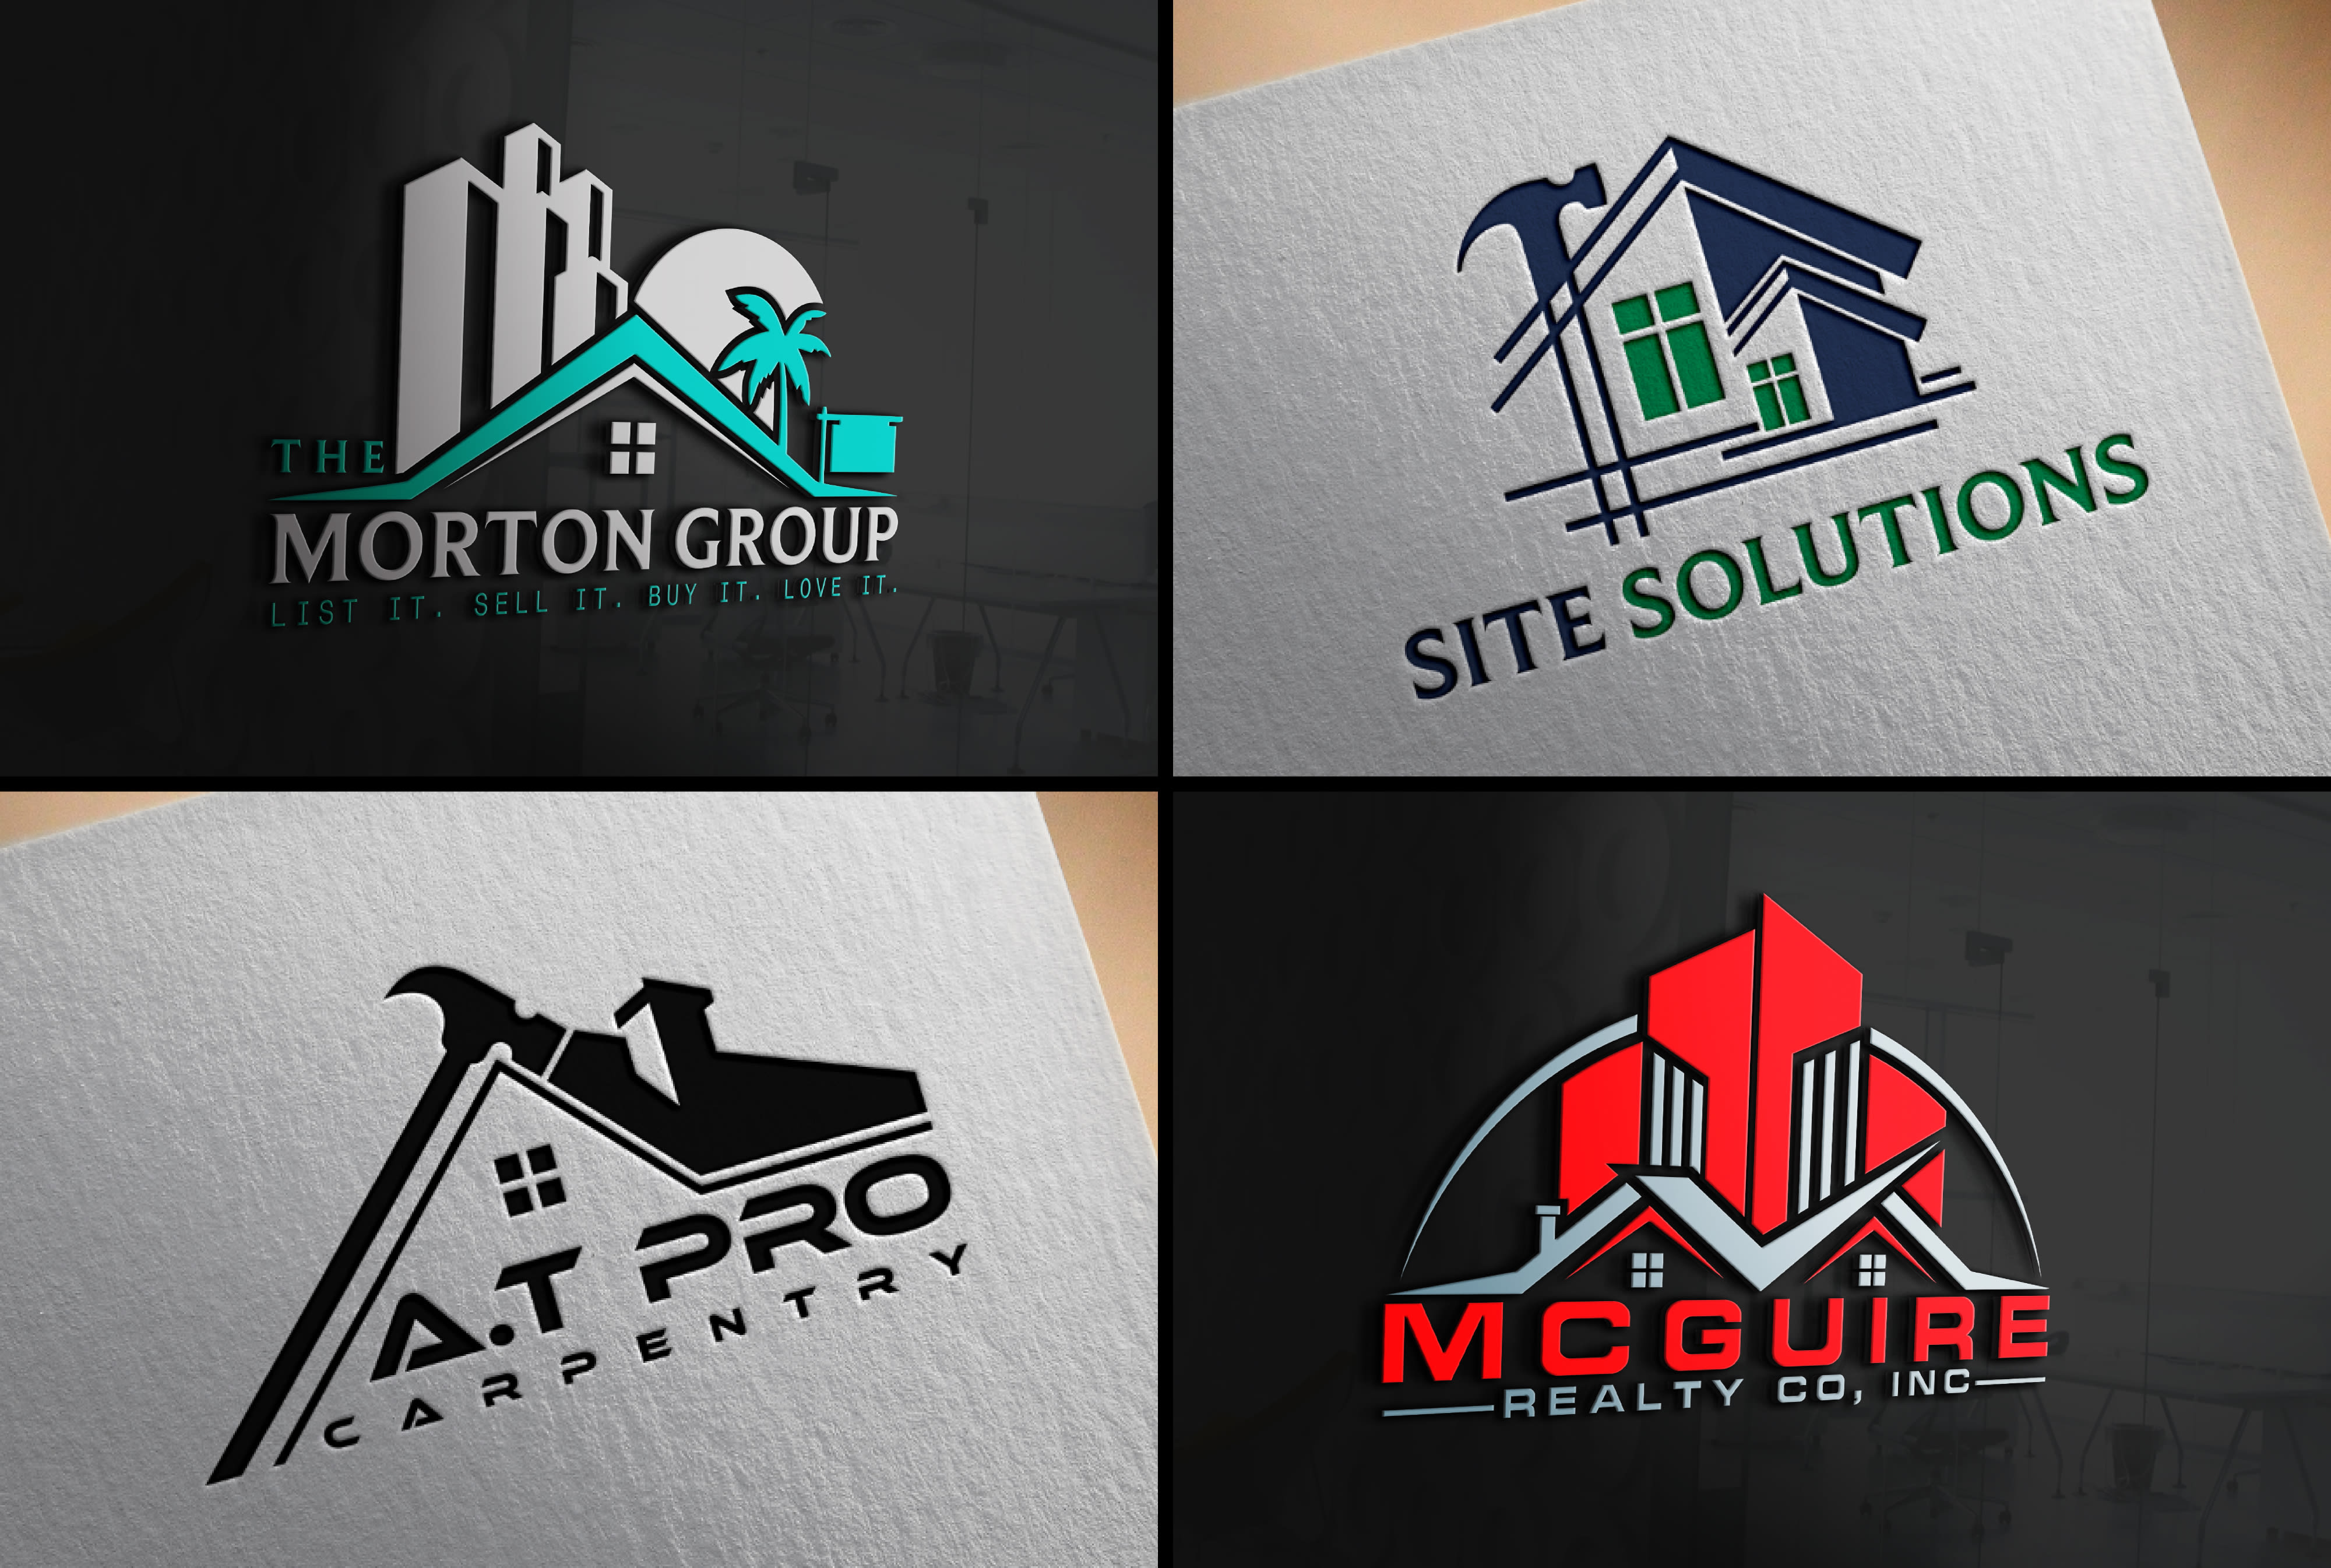 Construction Logo Stock Illustrations, Royalty-Free Vector Graphics & Clip  Art - iStock | Construction logo icon set, Logo, Construction